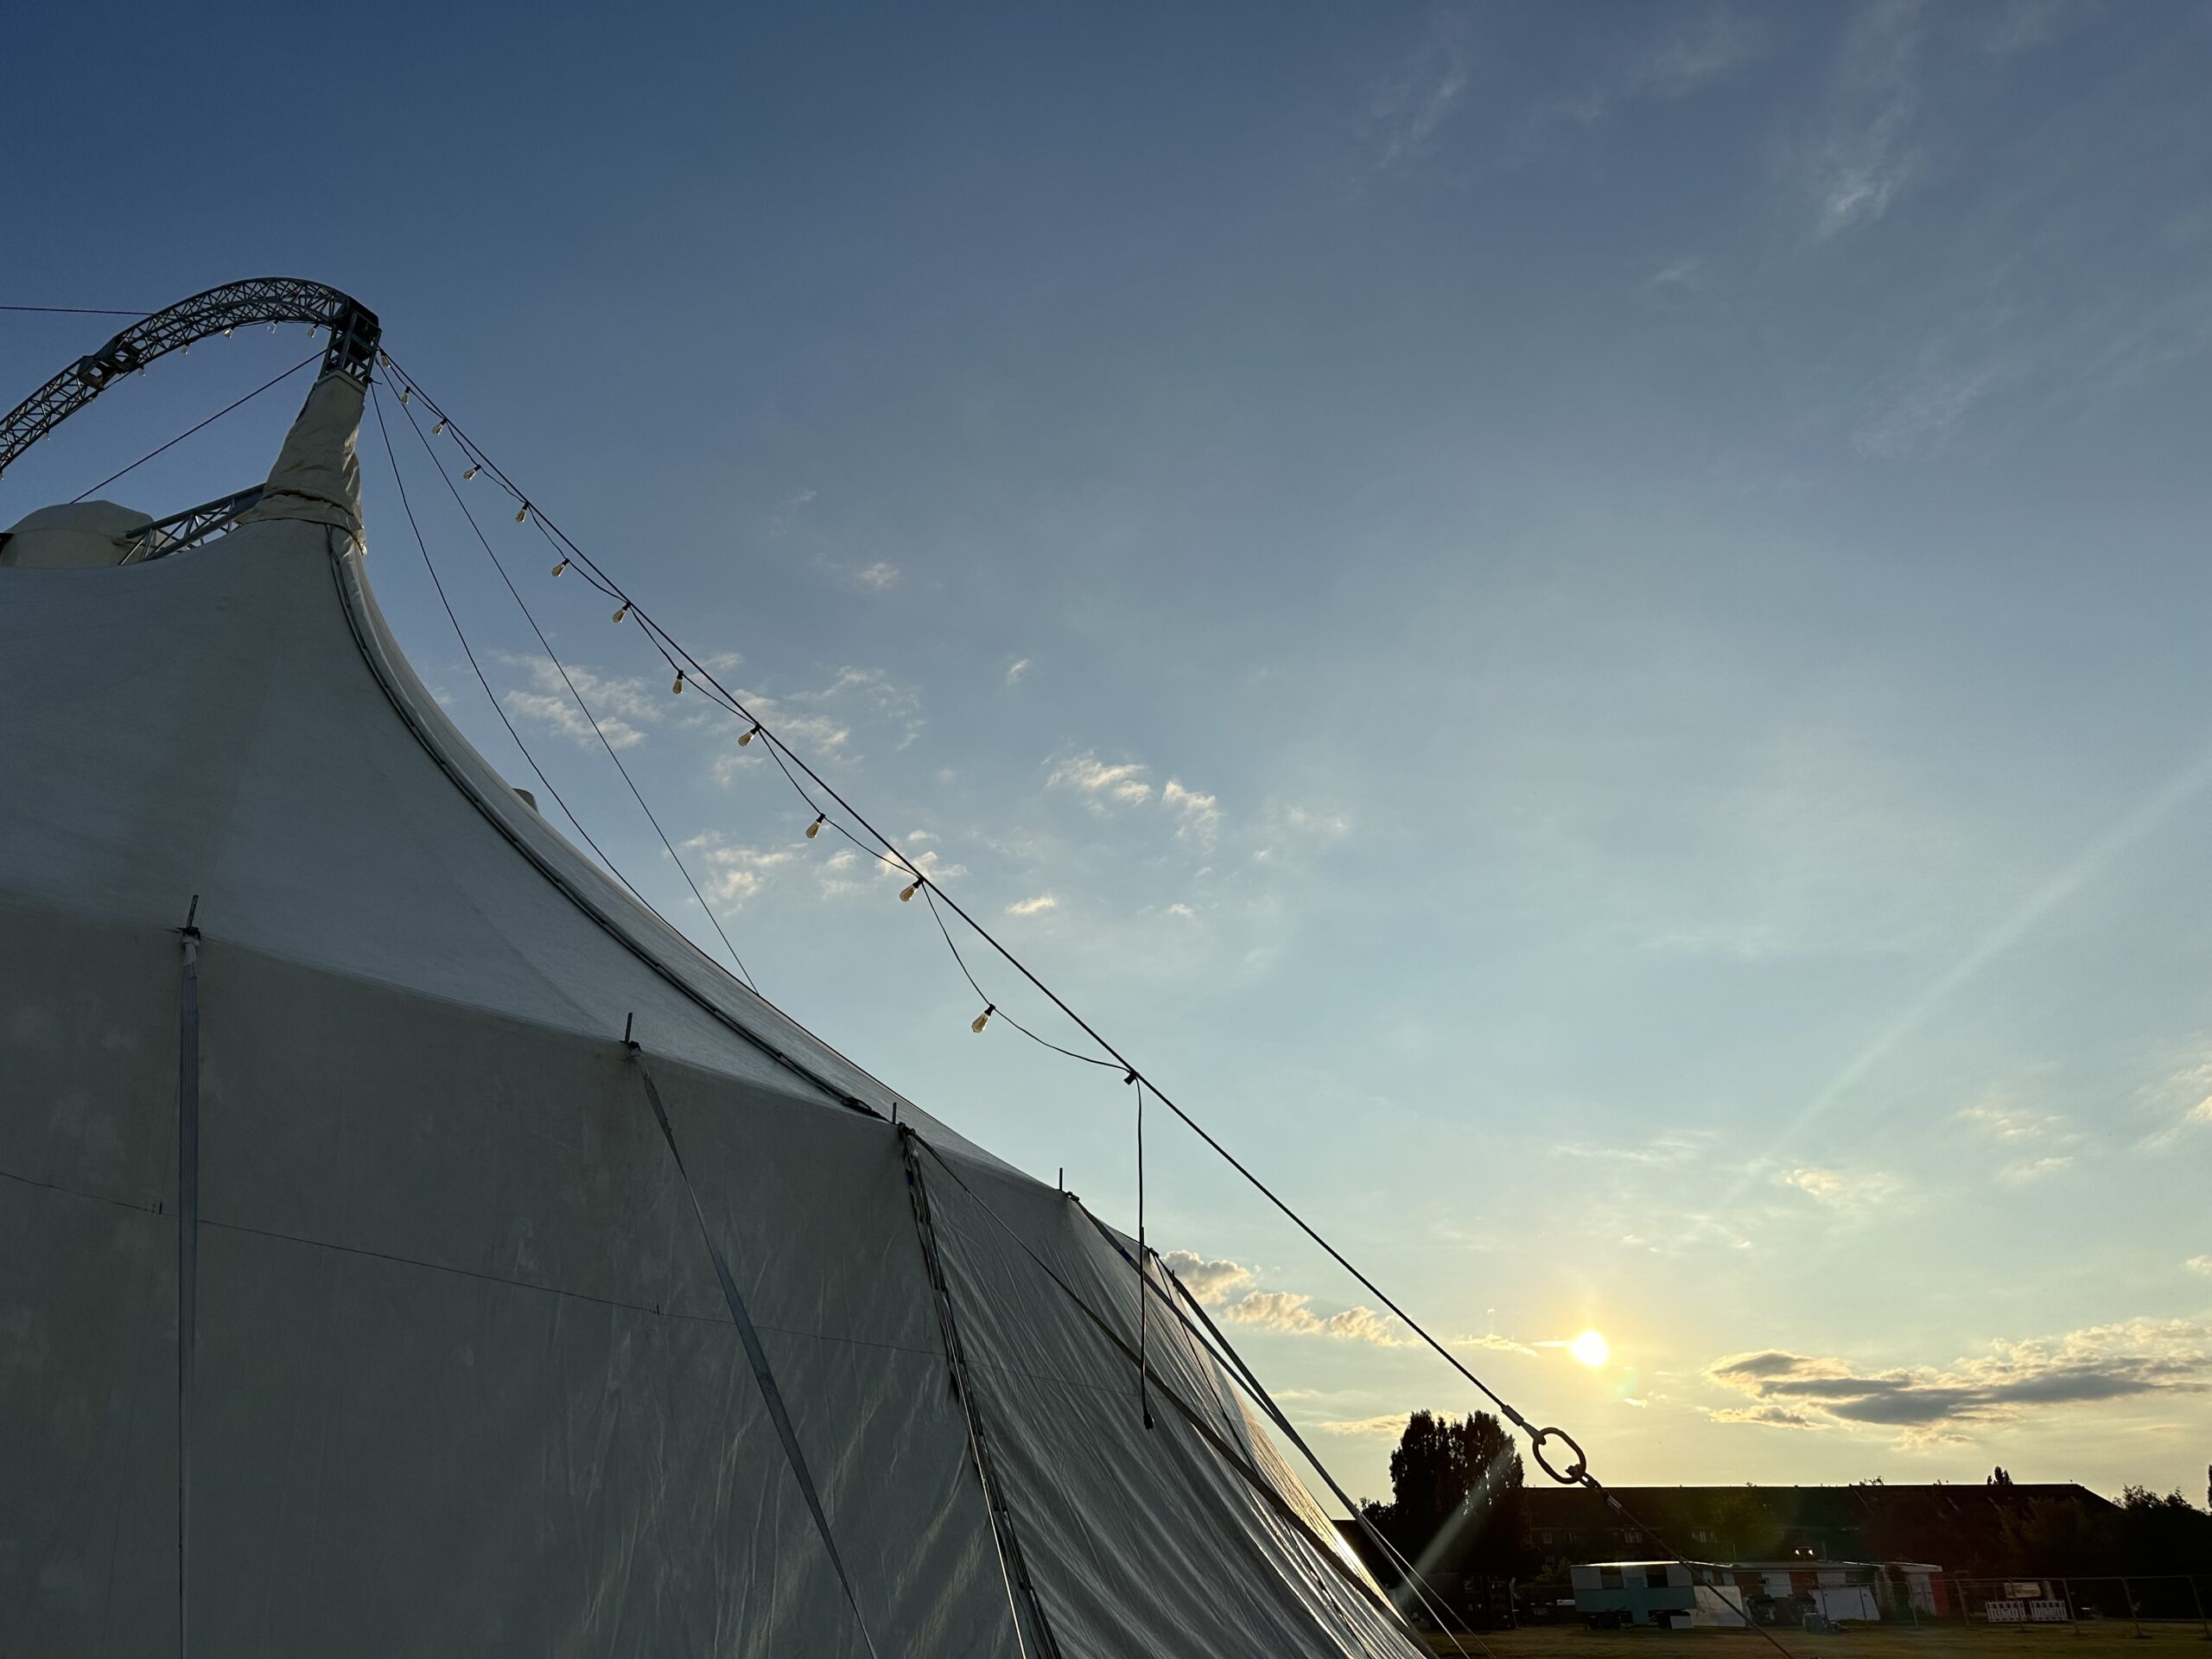 circus tent during dusk